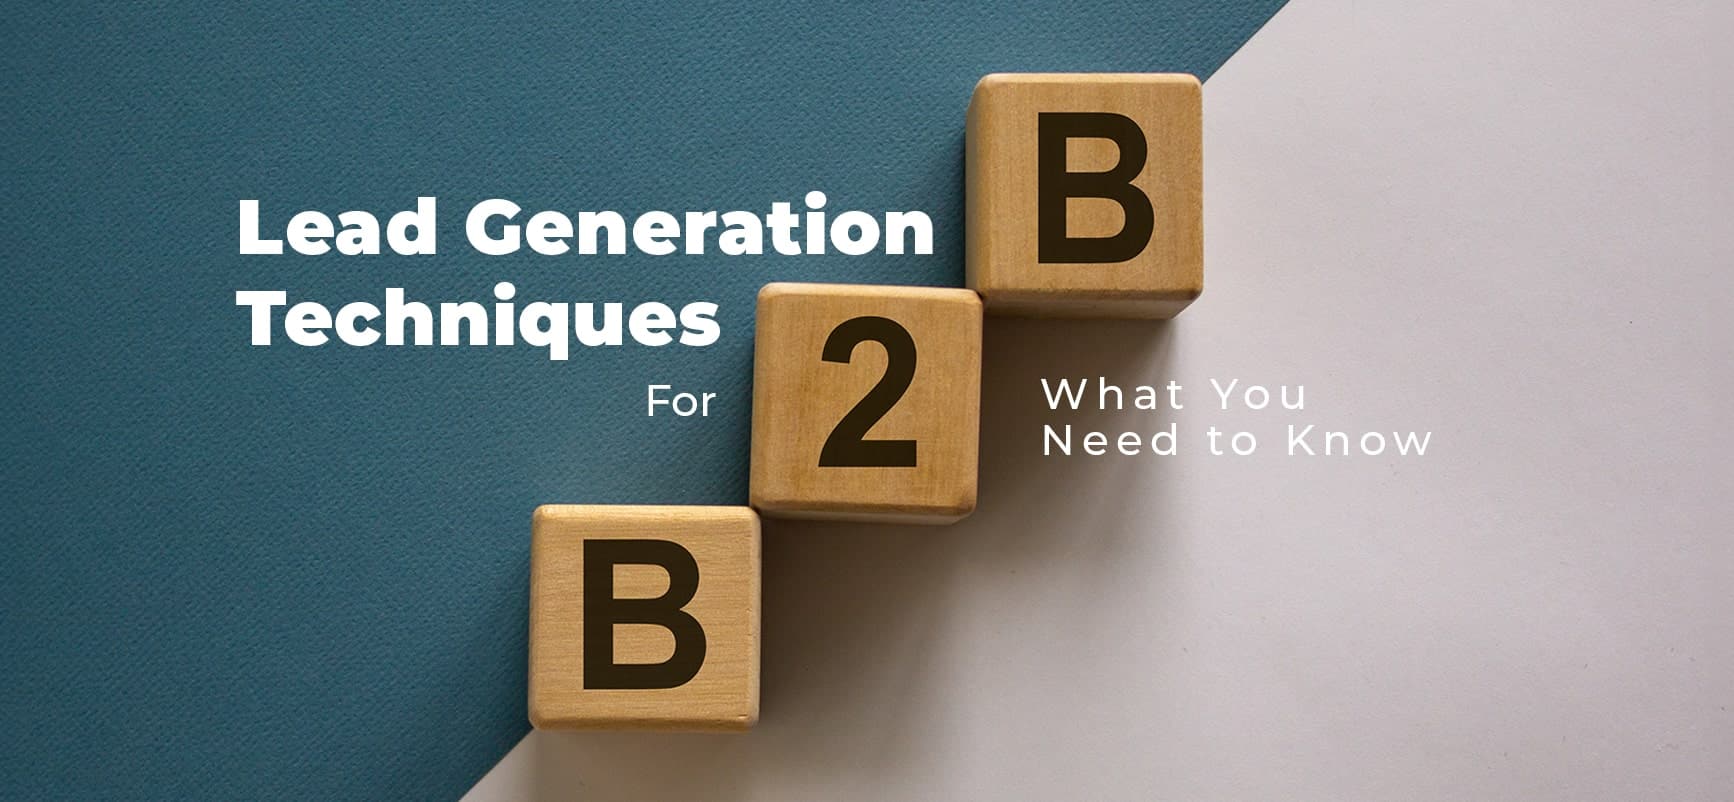 lead generation techniques for b2b